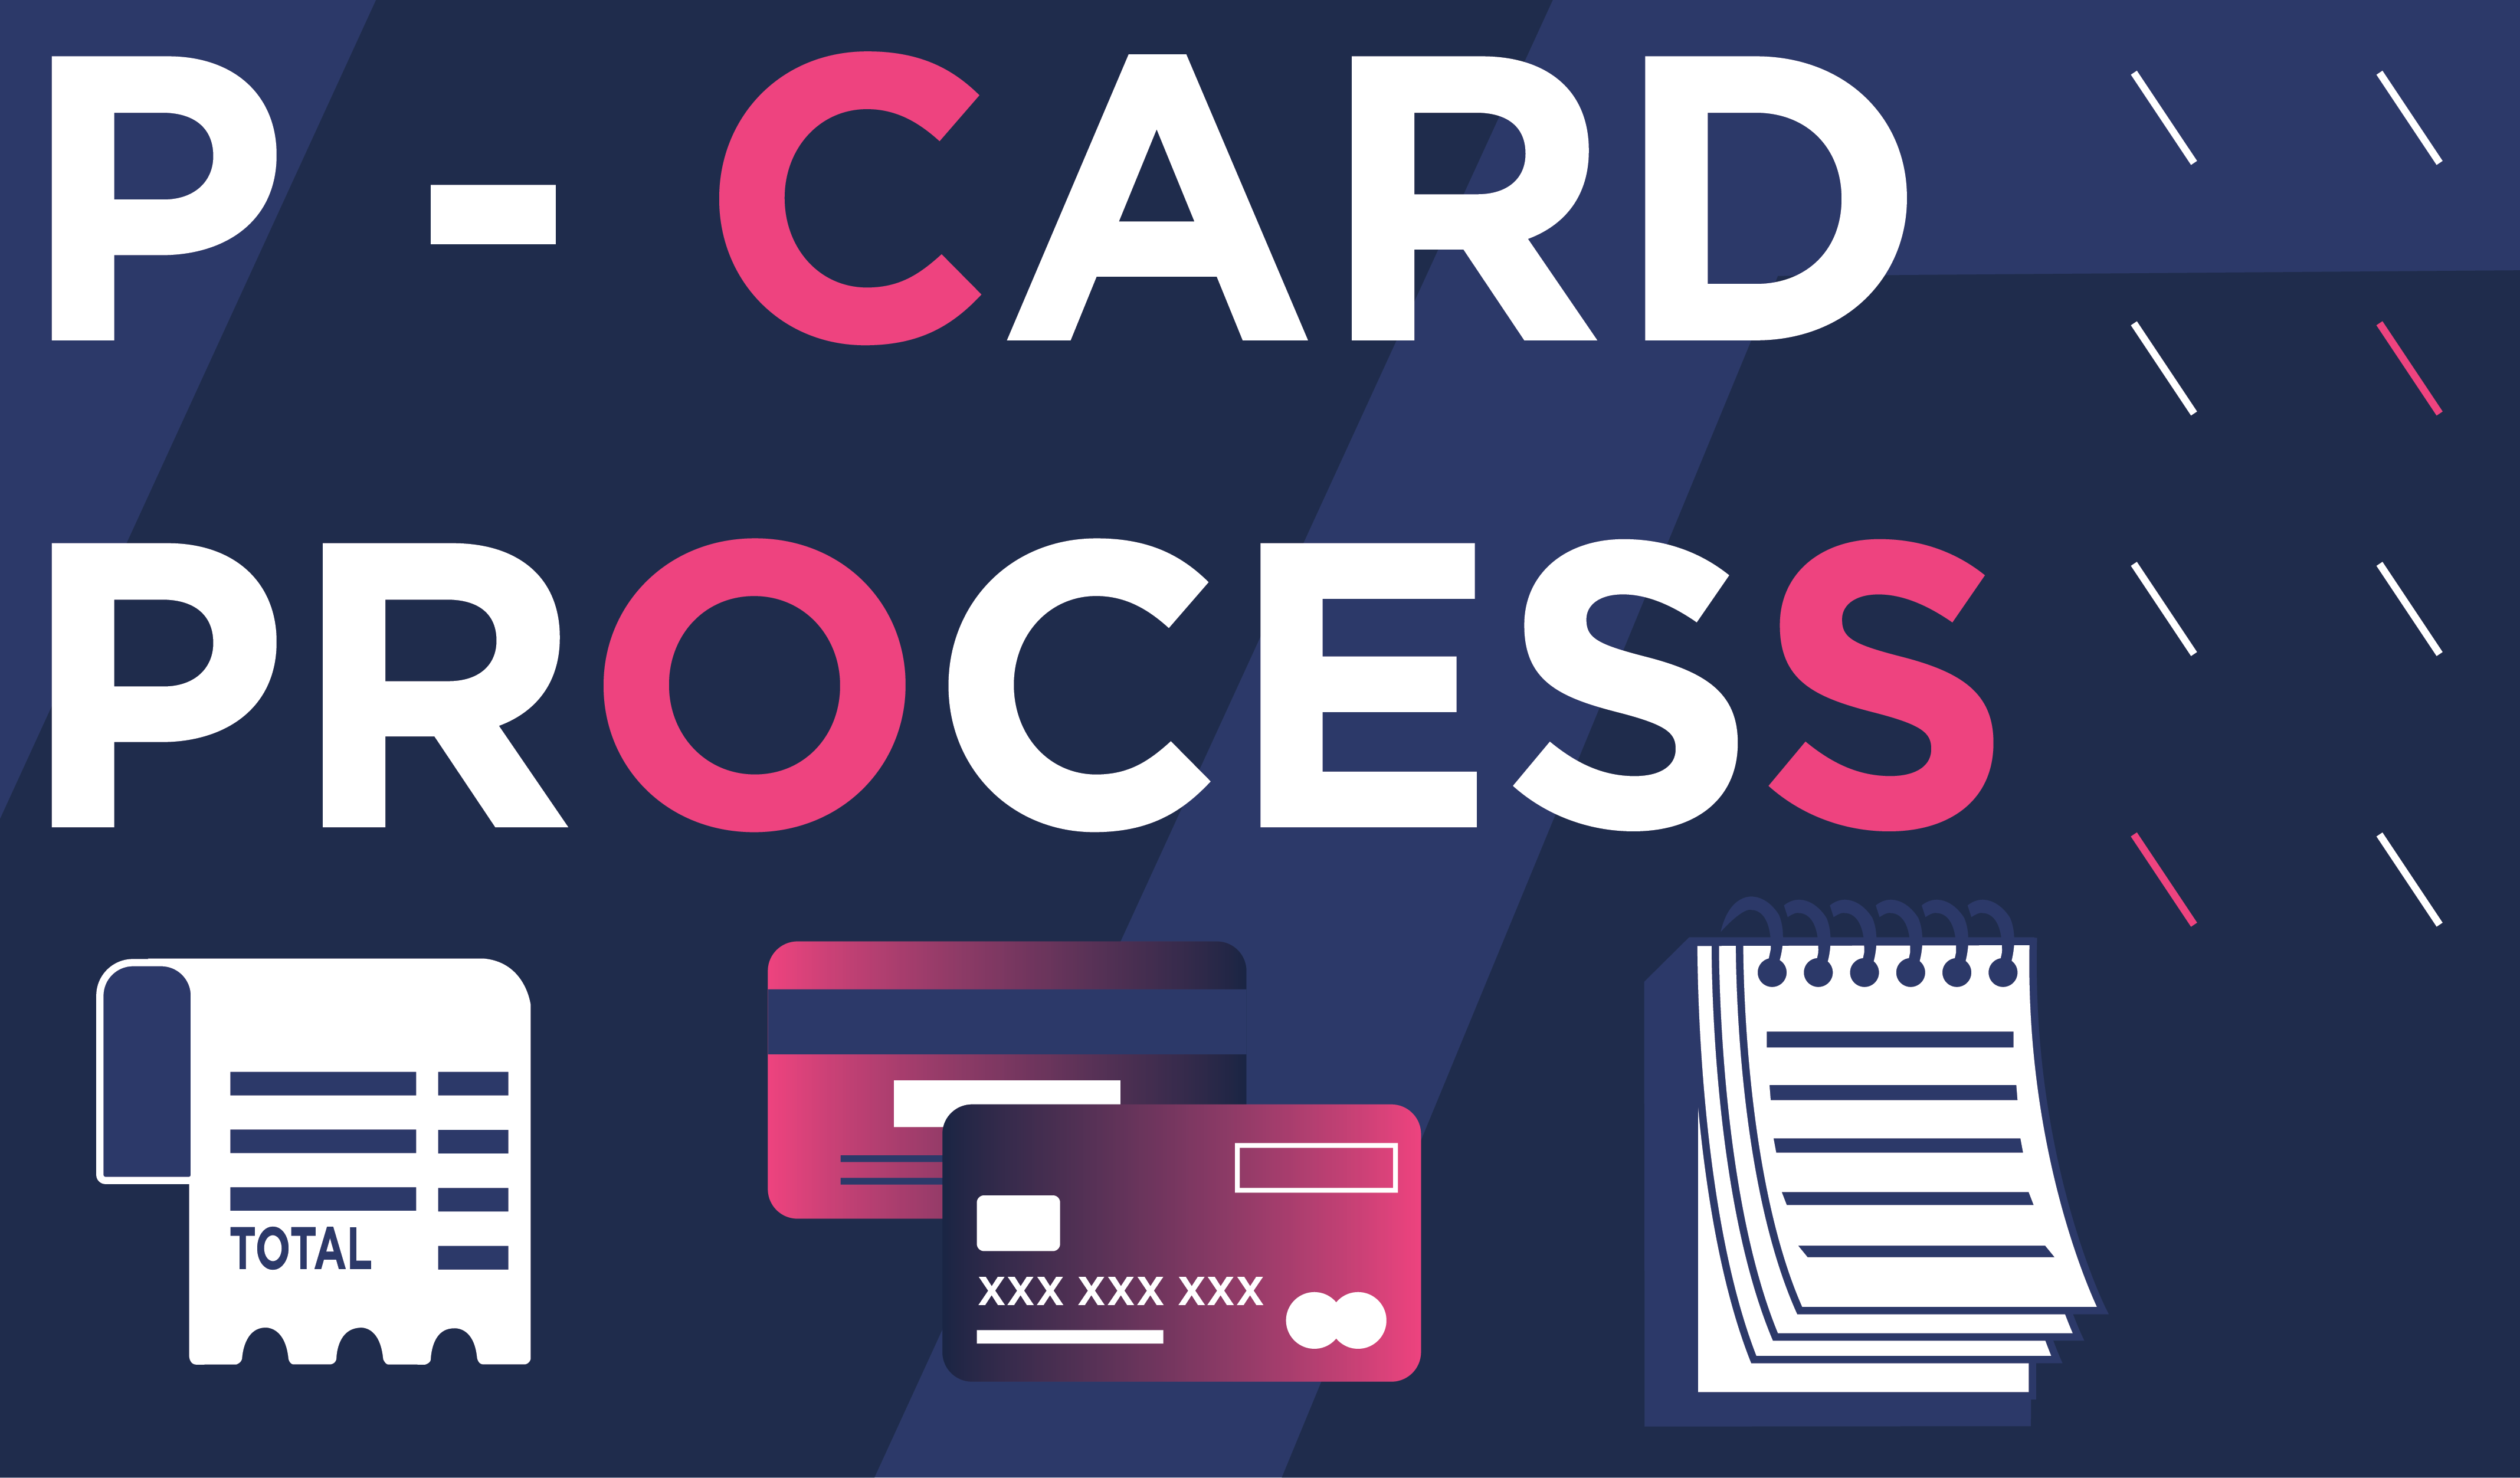 P-Card Process Image